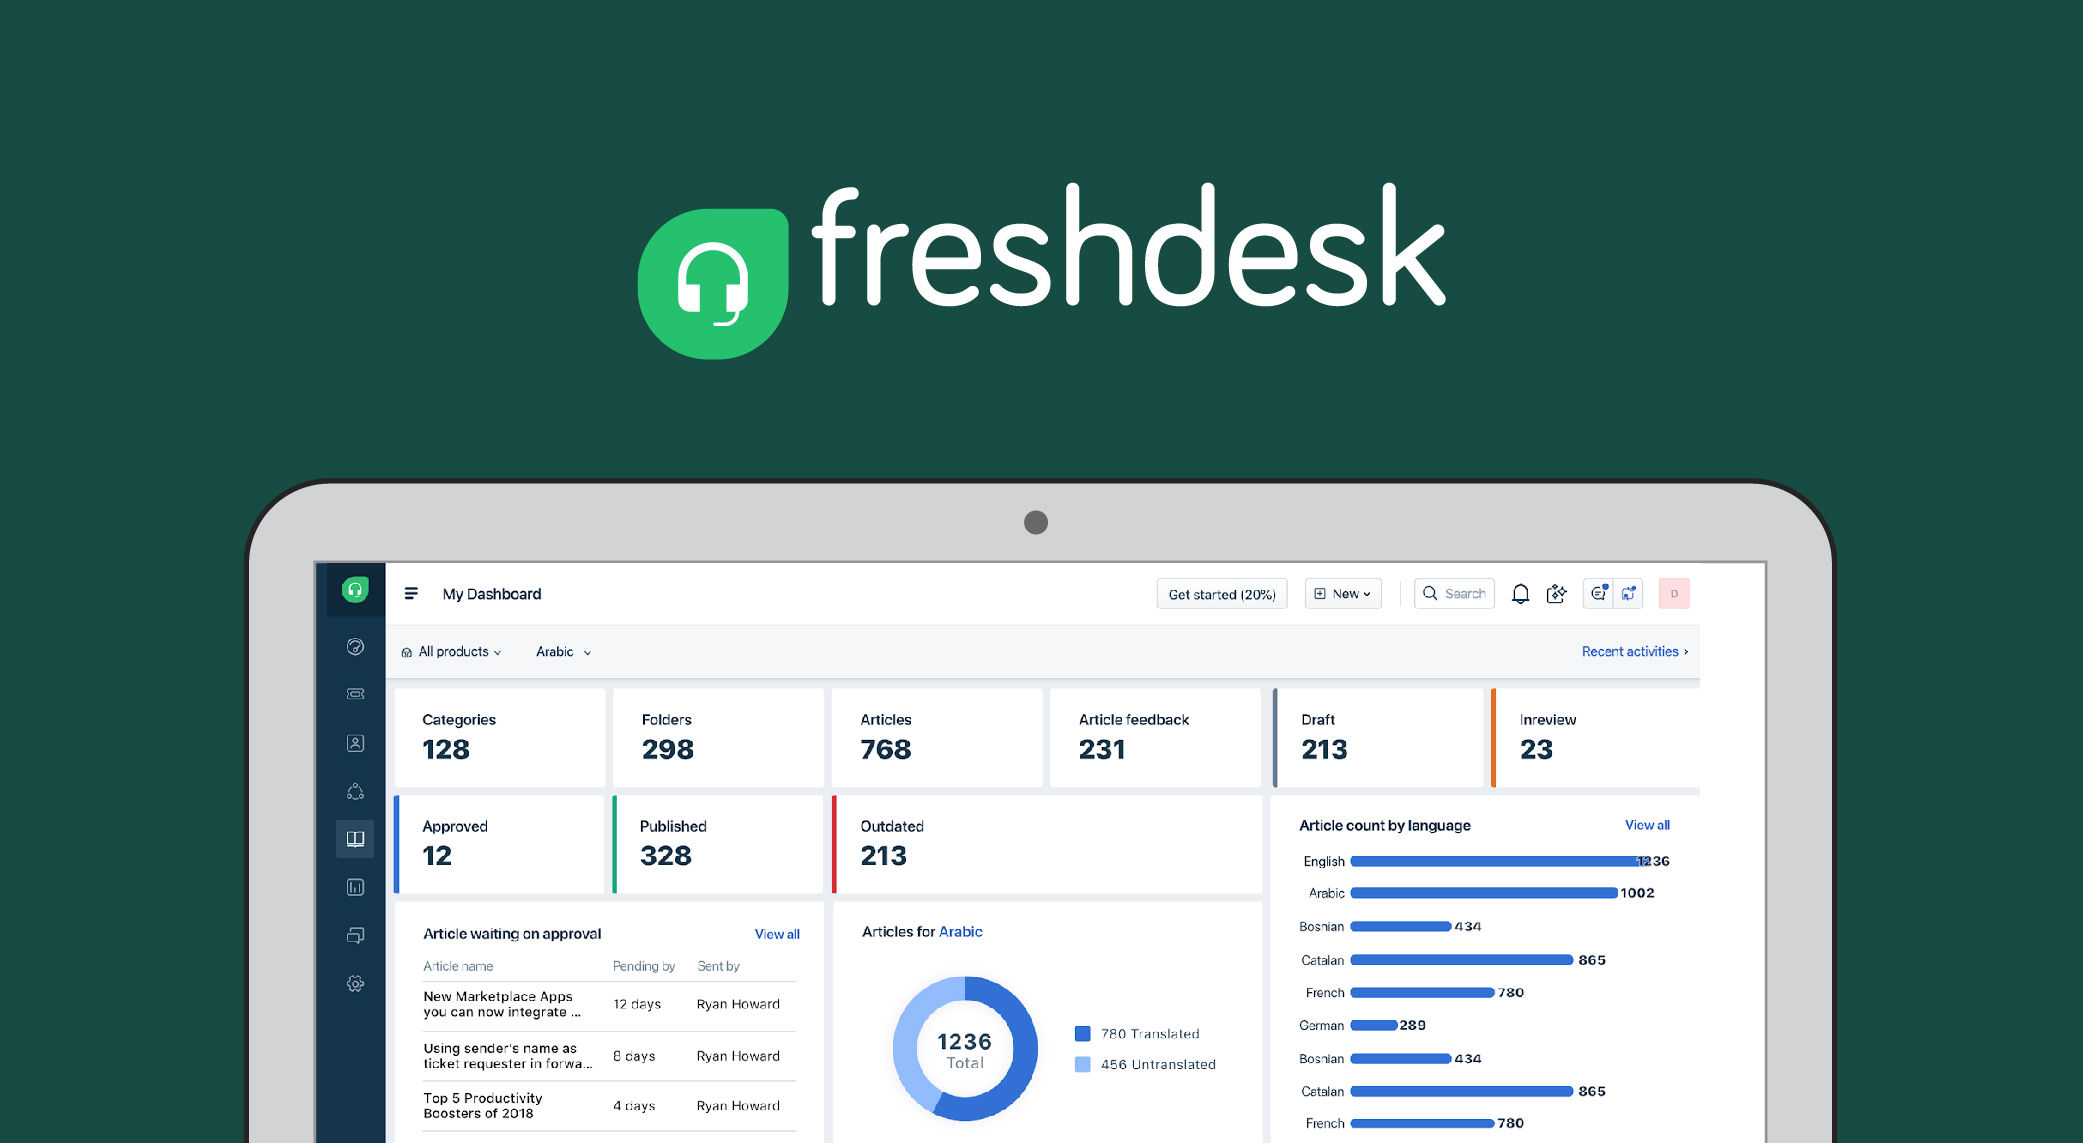 Picture of Freshworks Freshdesk tools.